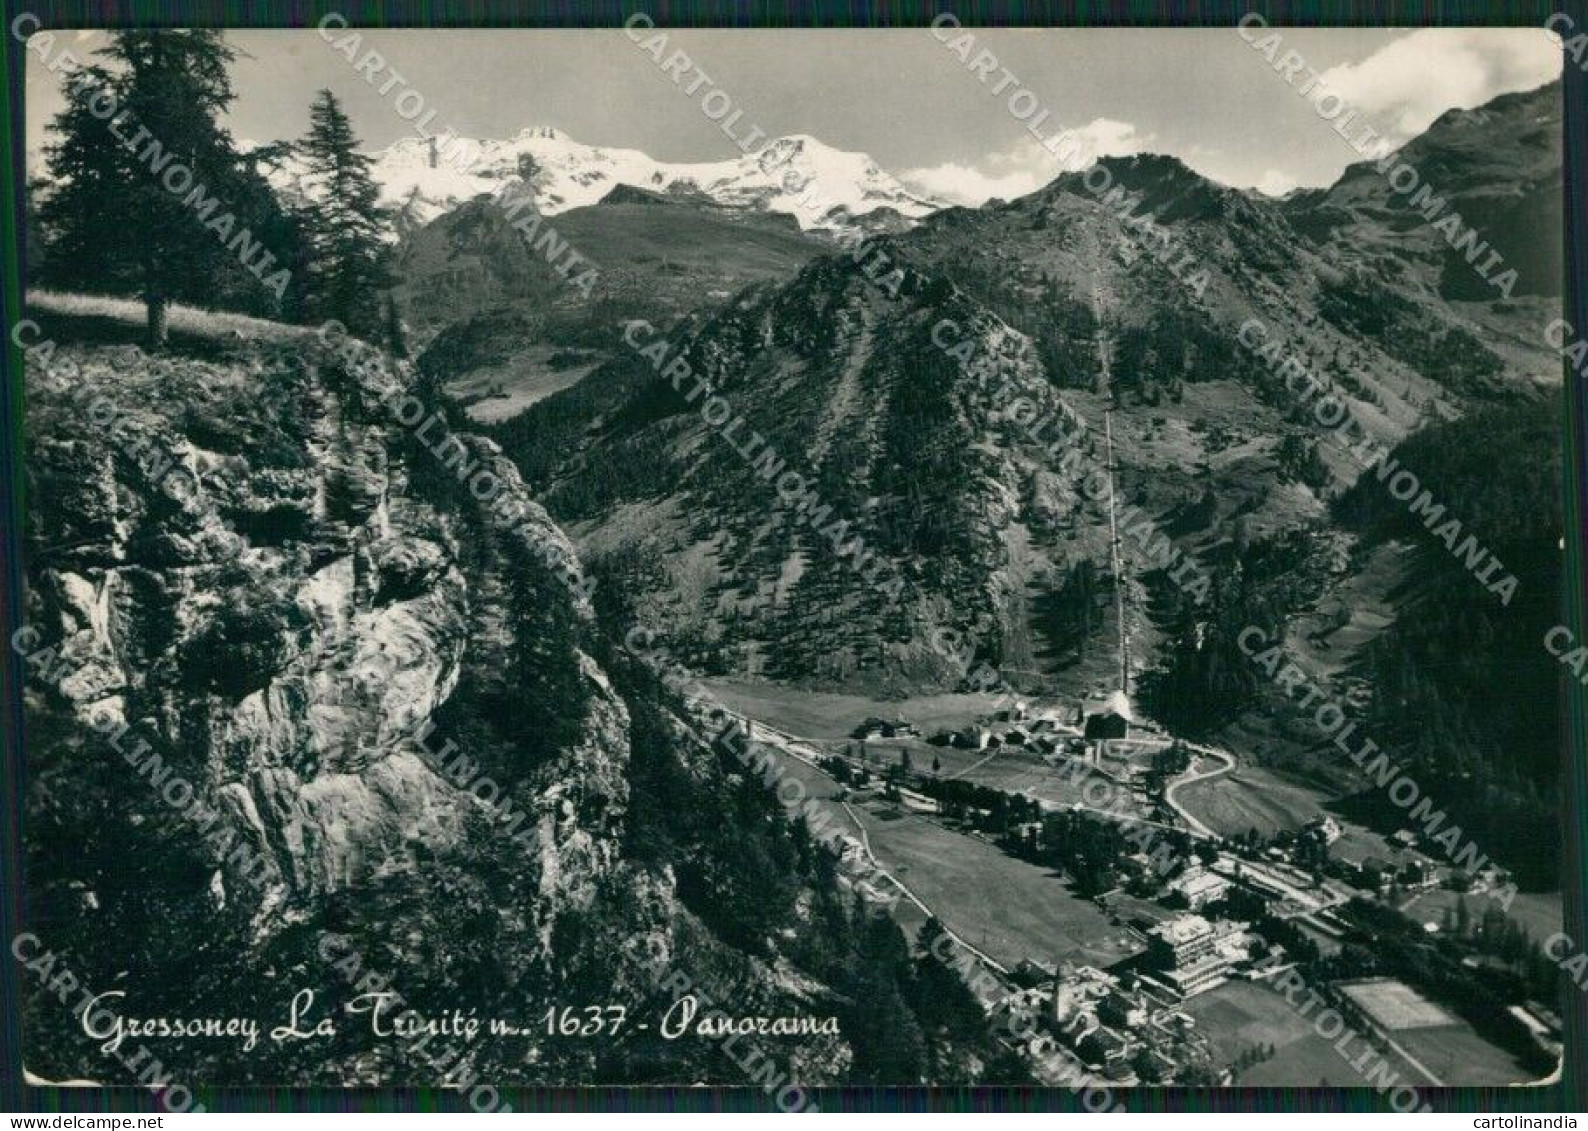 Aosta Gressoney La Trinitè PIEGHINA Foto FG Cartolina KB1587 - Aosta